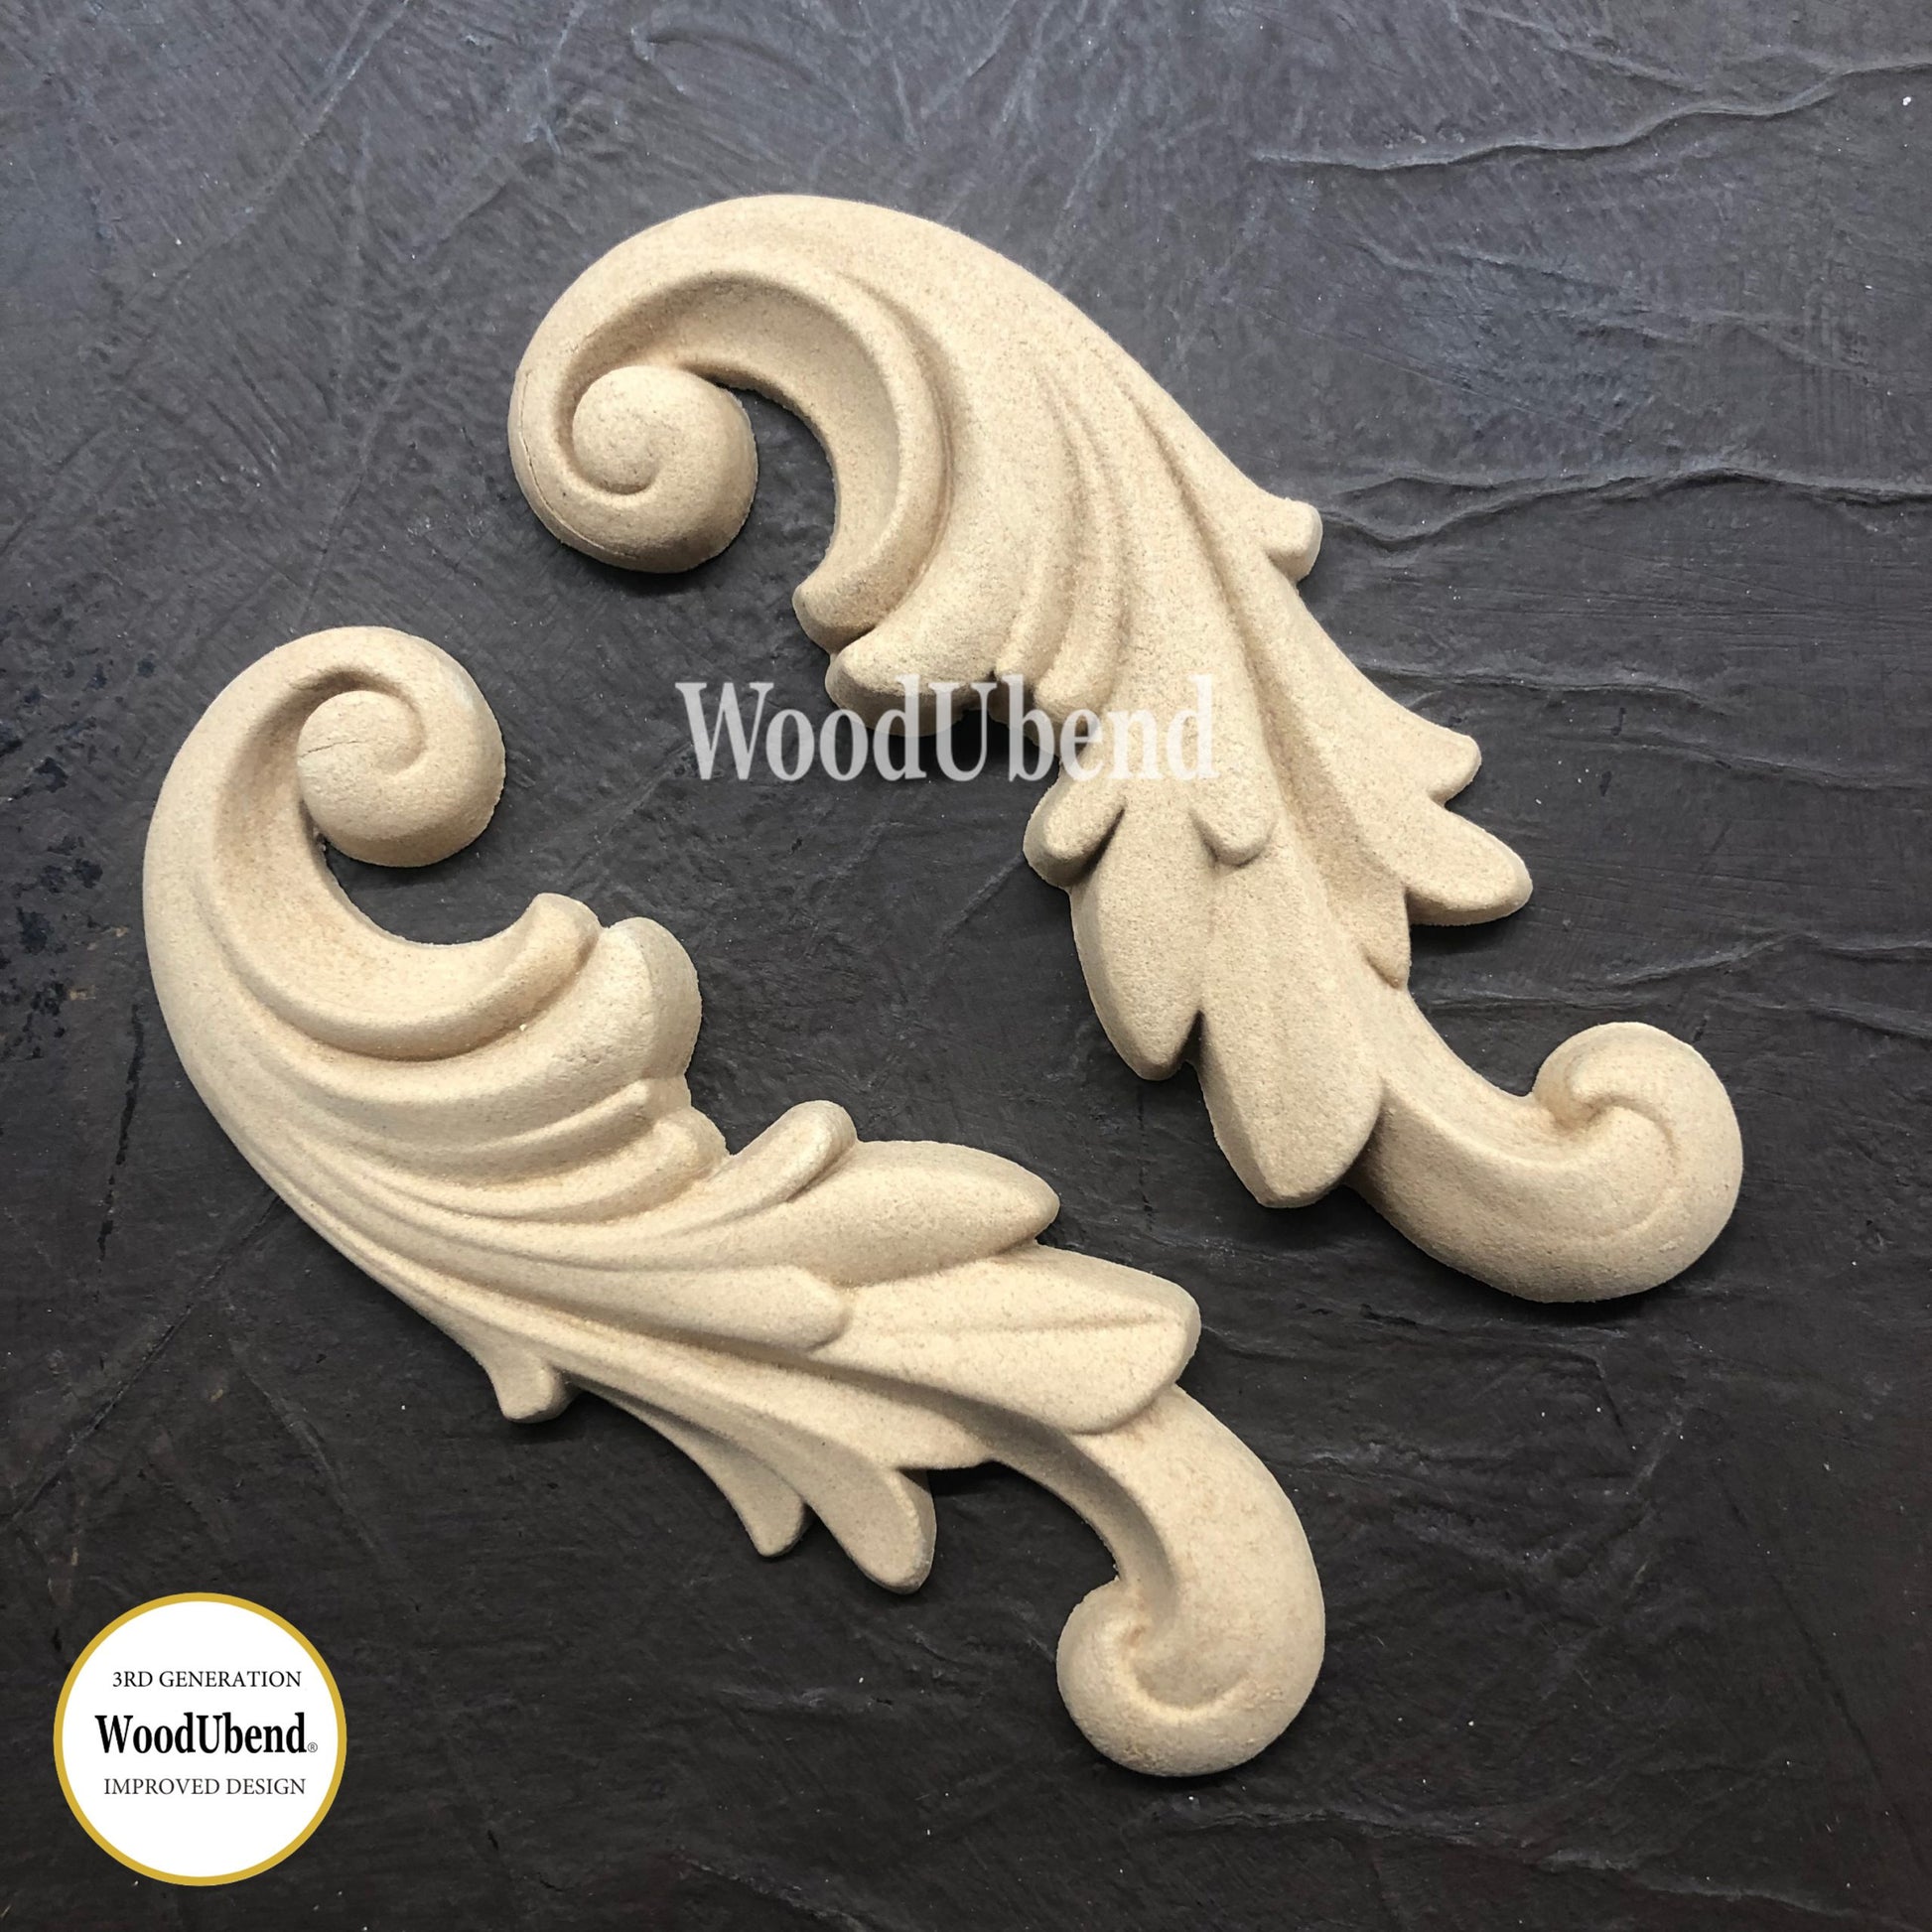 Pair of Decorative WooduBend Scrolls 12x5cms WUB1320 - Da Vinci Chalk Paint & Rustic home decor